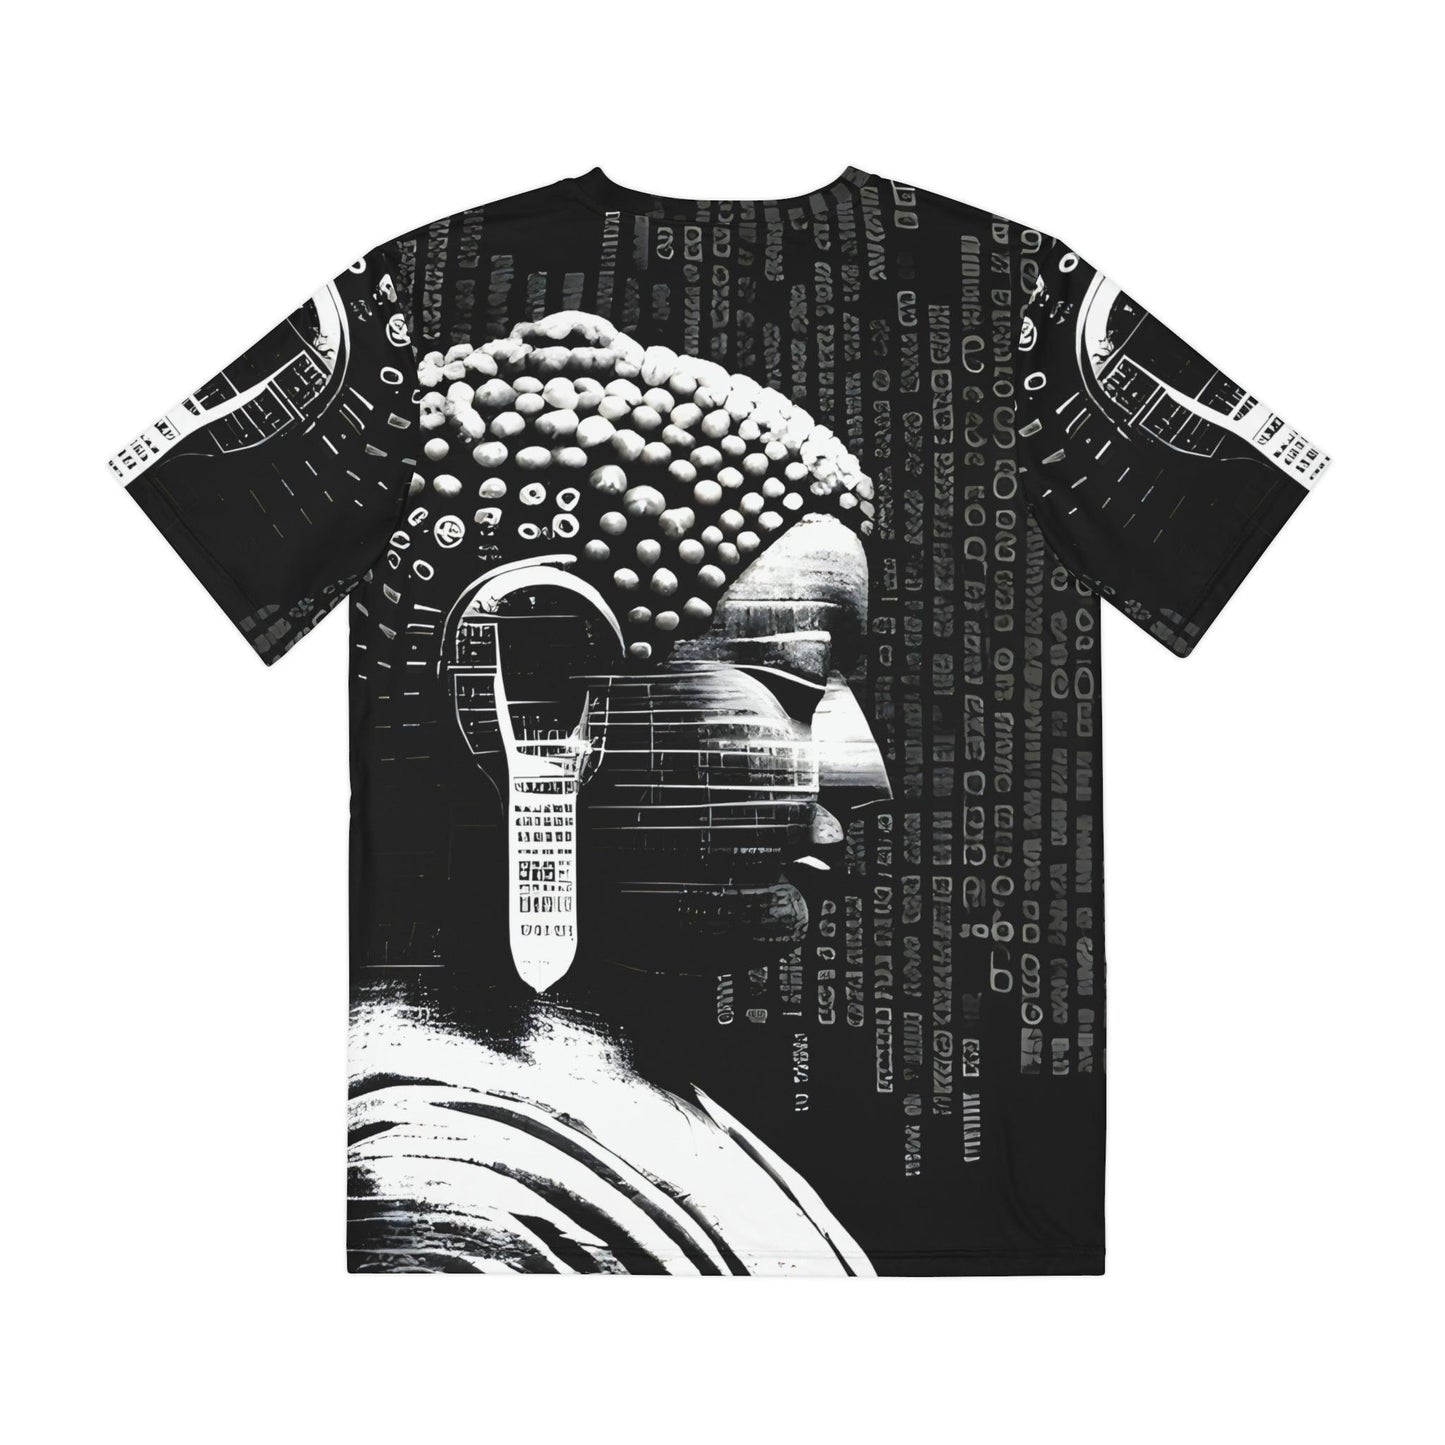 Earpath to Enlightenment - Buddha Bohdisatva, For Him Polyester Tee Shirt (AOP) - All Over Print - Street Wear - Festival Wear by Meta Zen v1.1 - Alchemystics.org